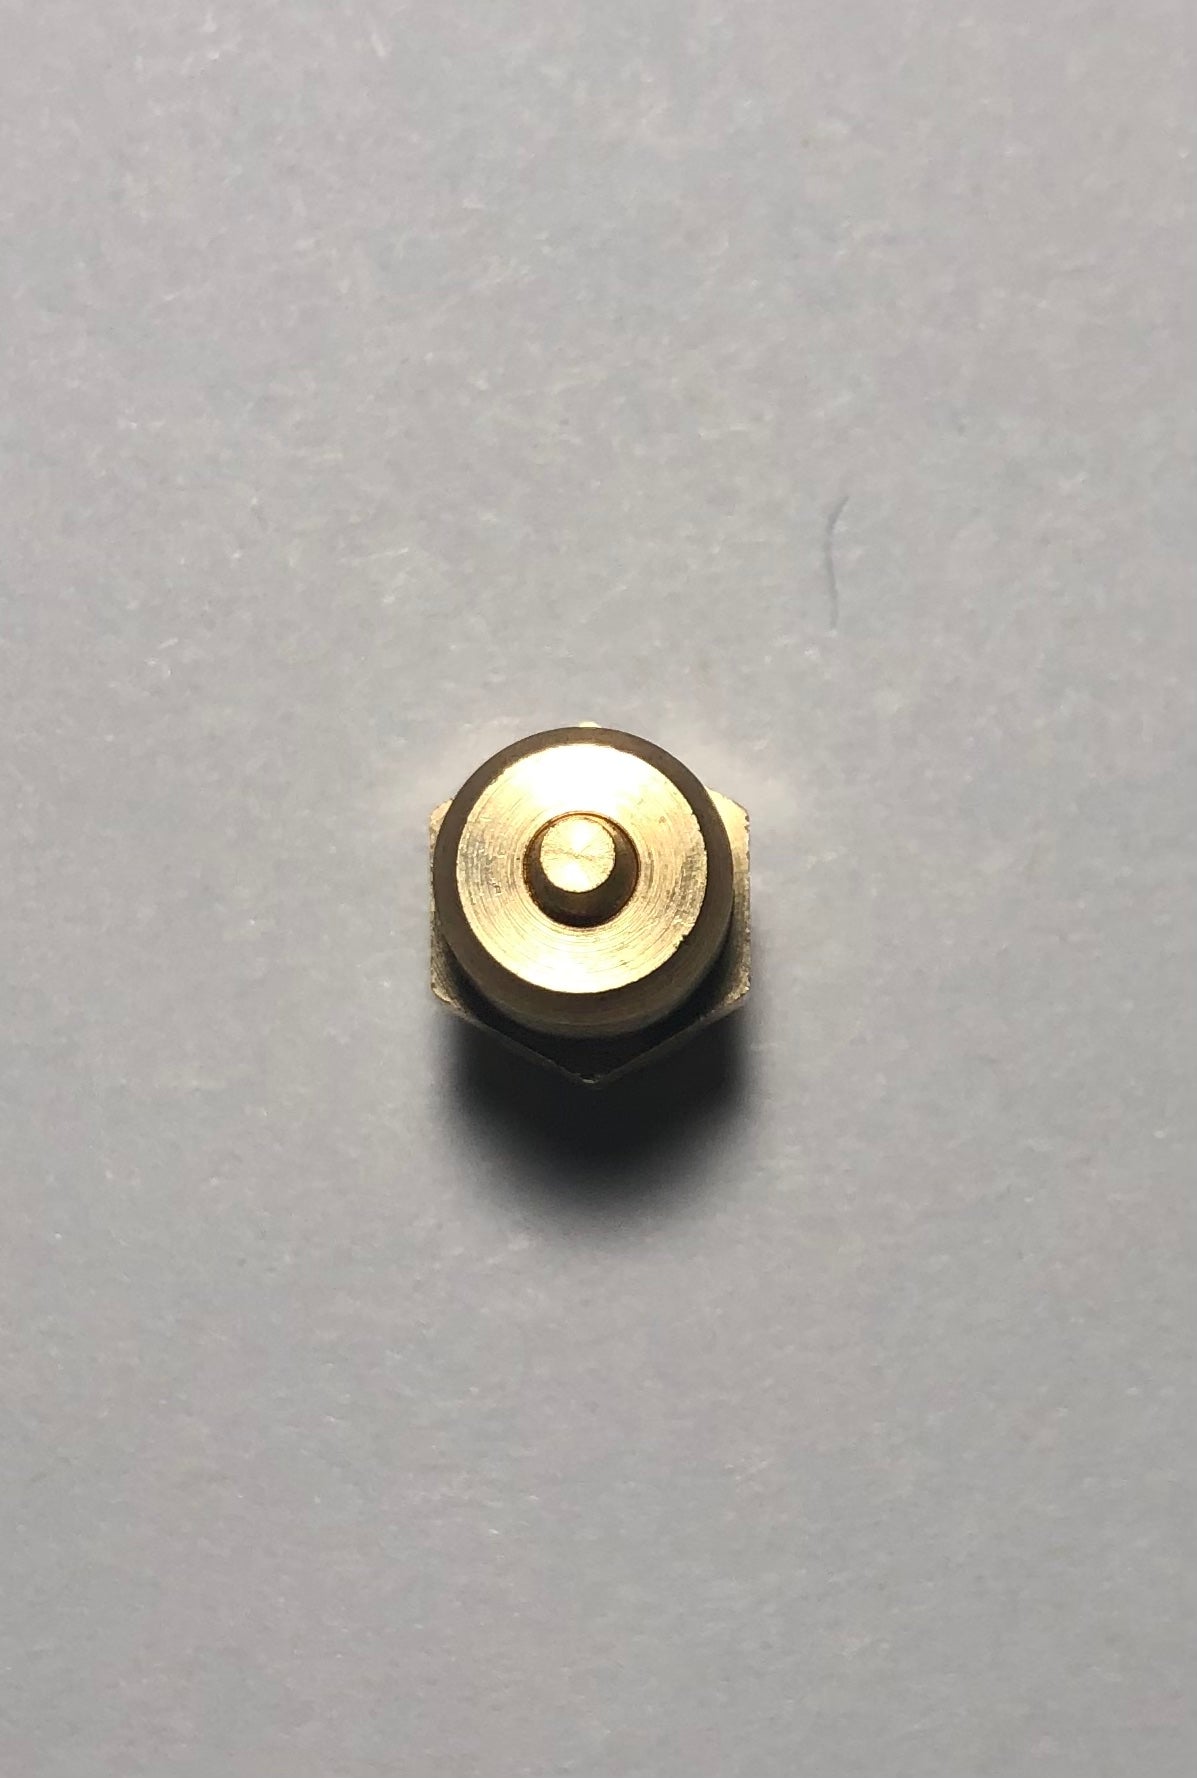 Air valve 1/8 copper arrow Head (unit) - 440100002US